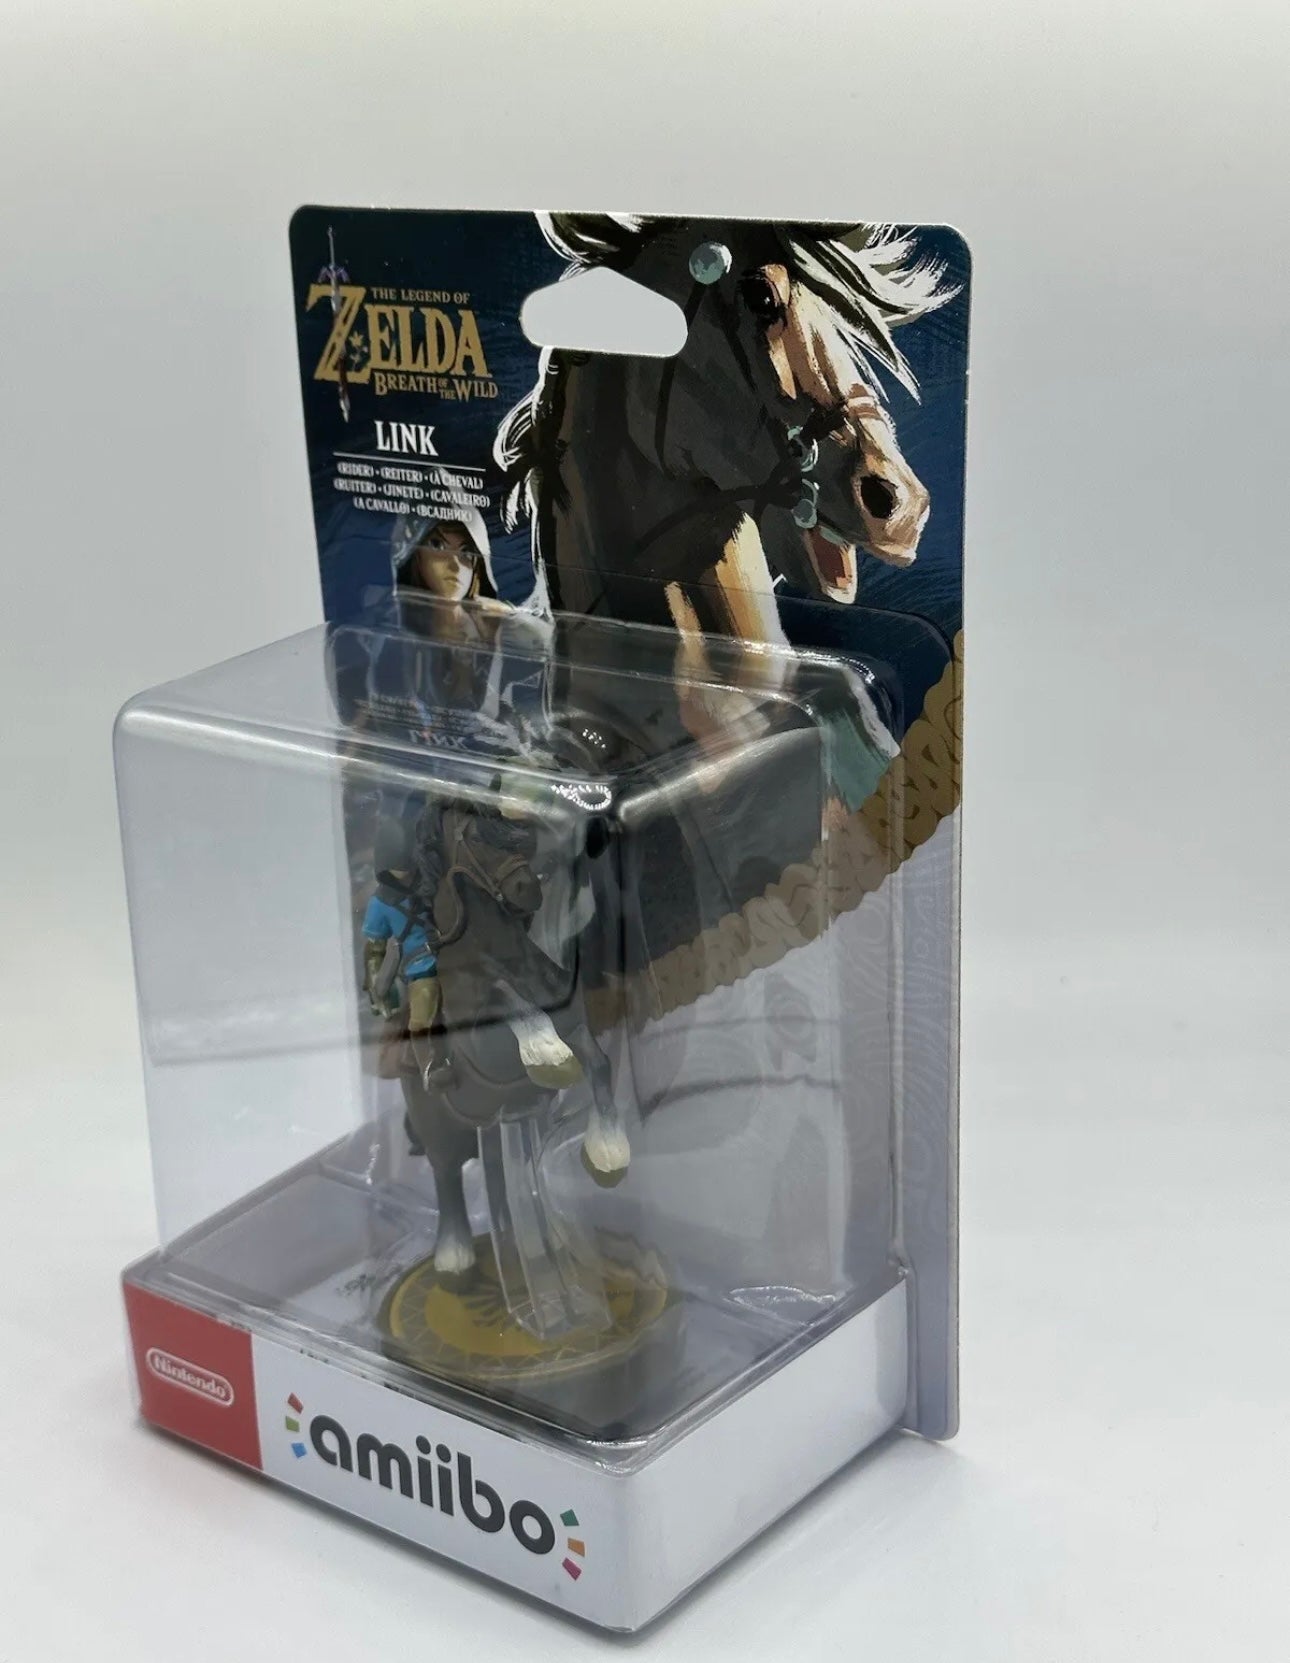 Legend Of Zelda Breath Of The Wild Link Rider Amiibo